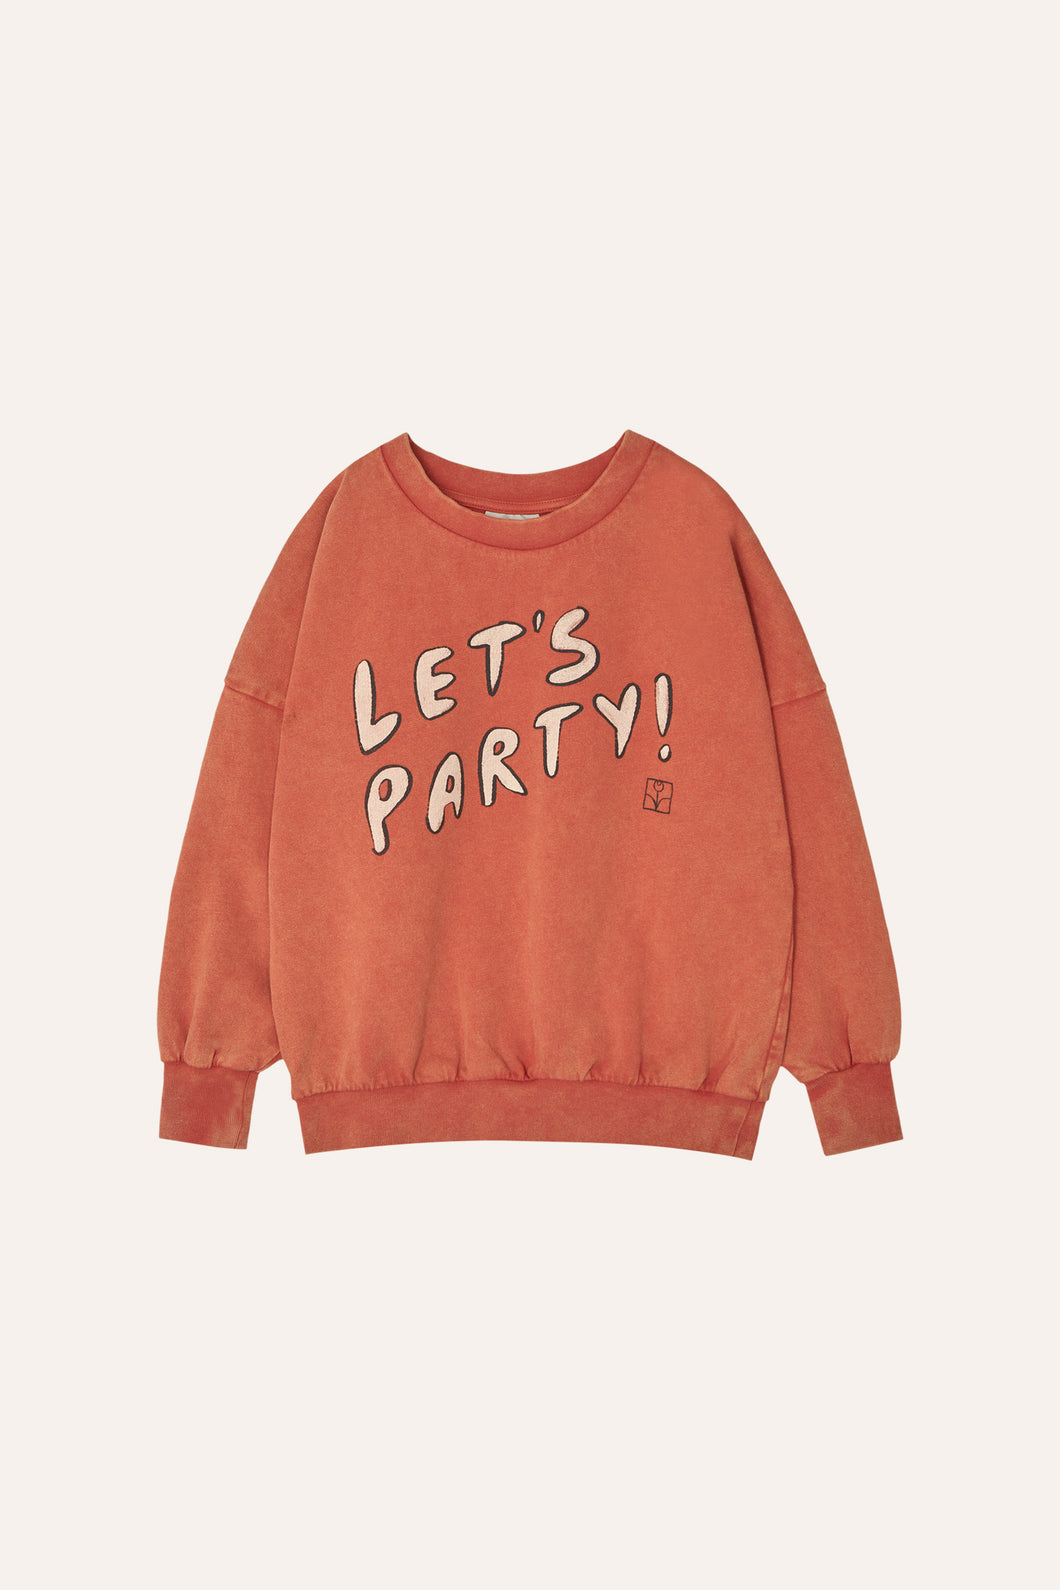 The Campamento / KID / Oversized Sweatshirt / Let’s Party